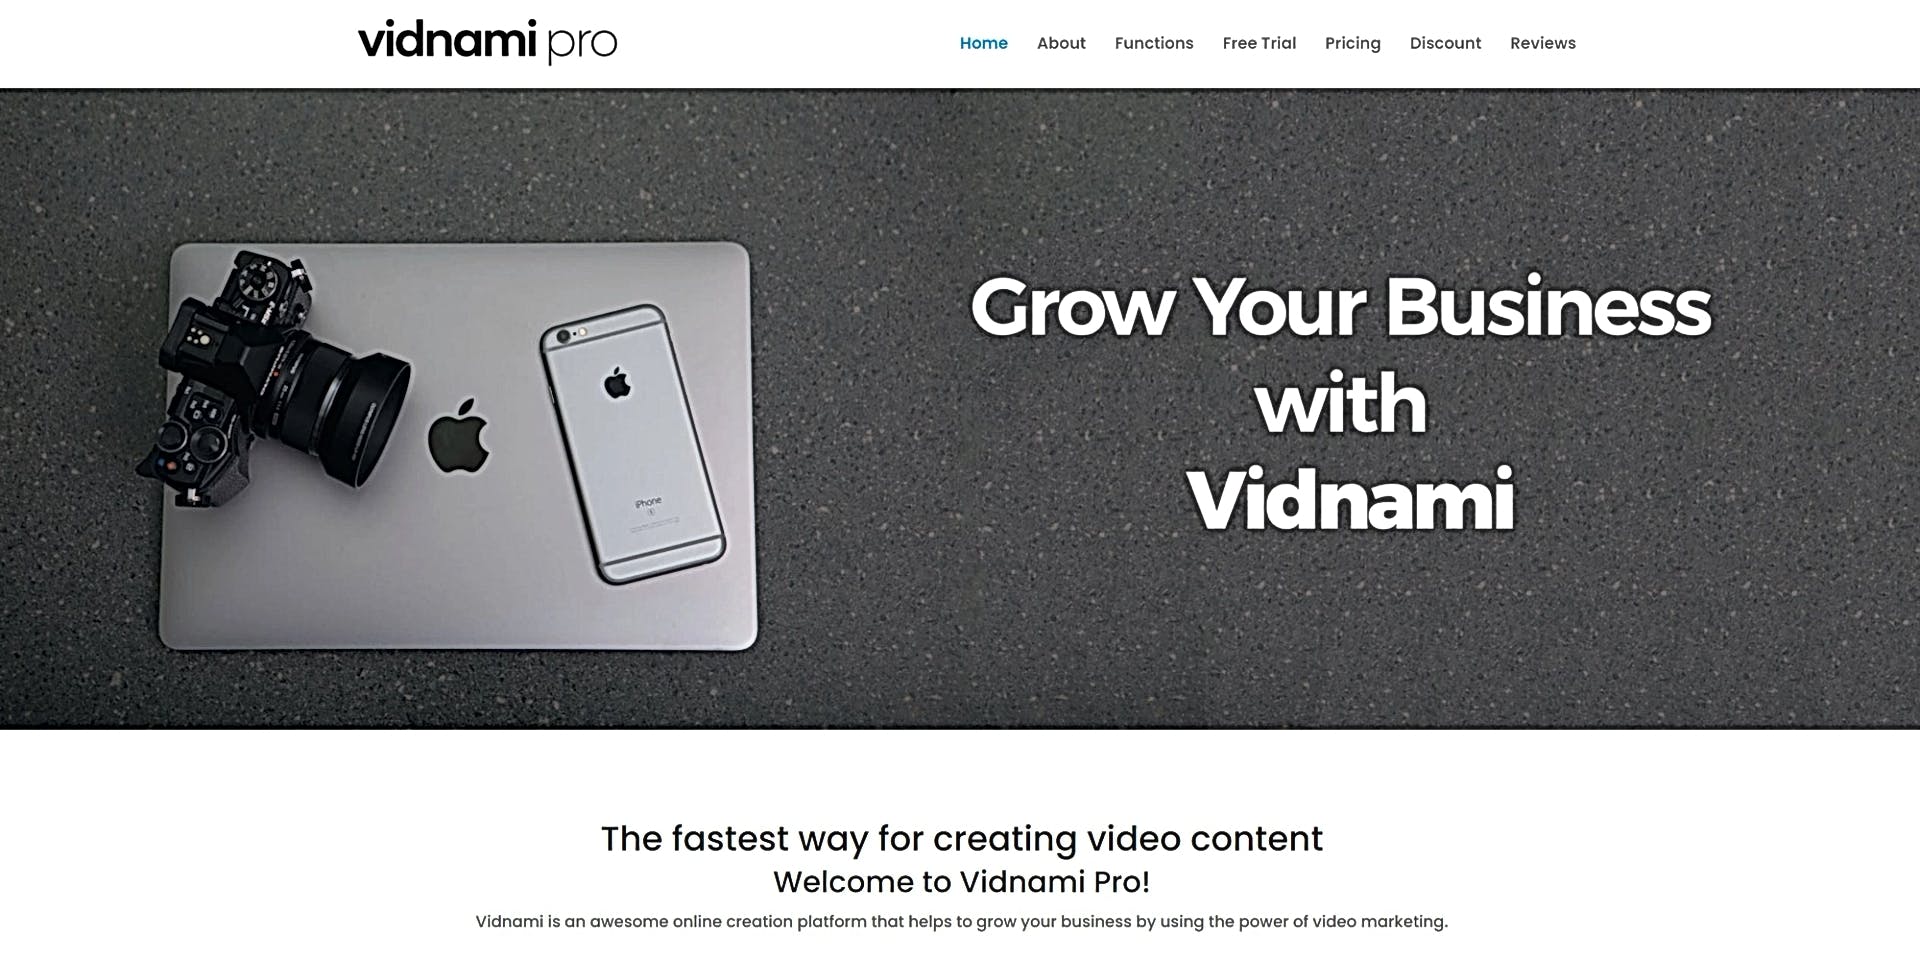 Vidnami Pro featured